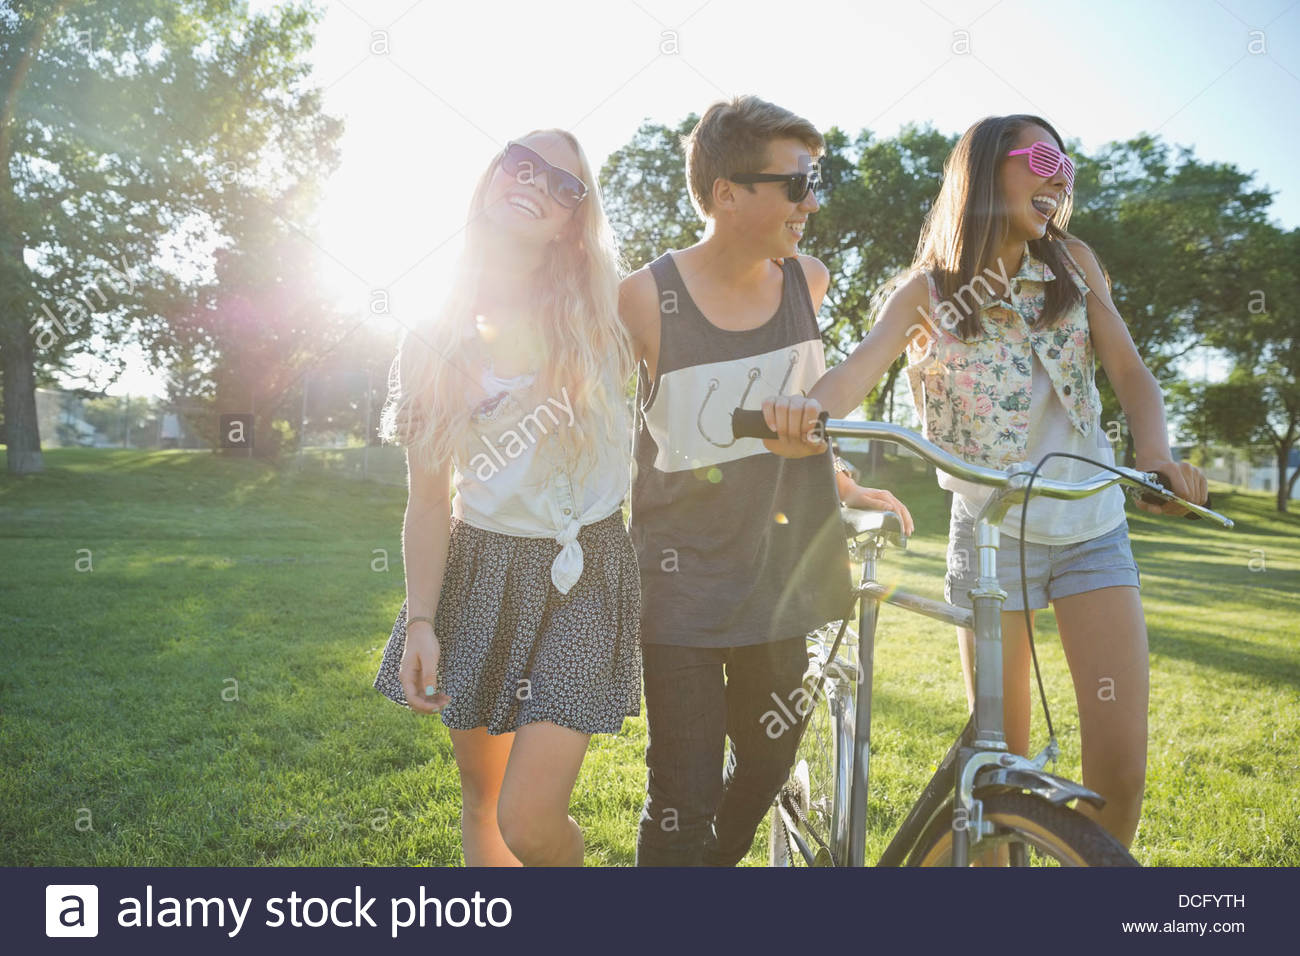 Teenage friends avec location walking in park Banque D'Images